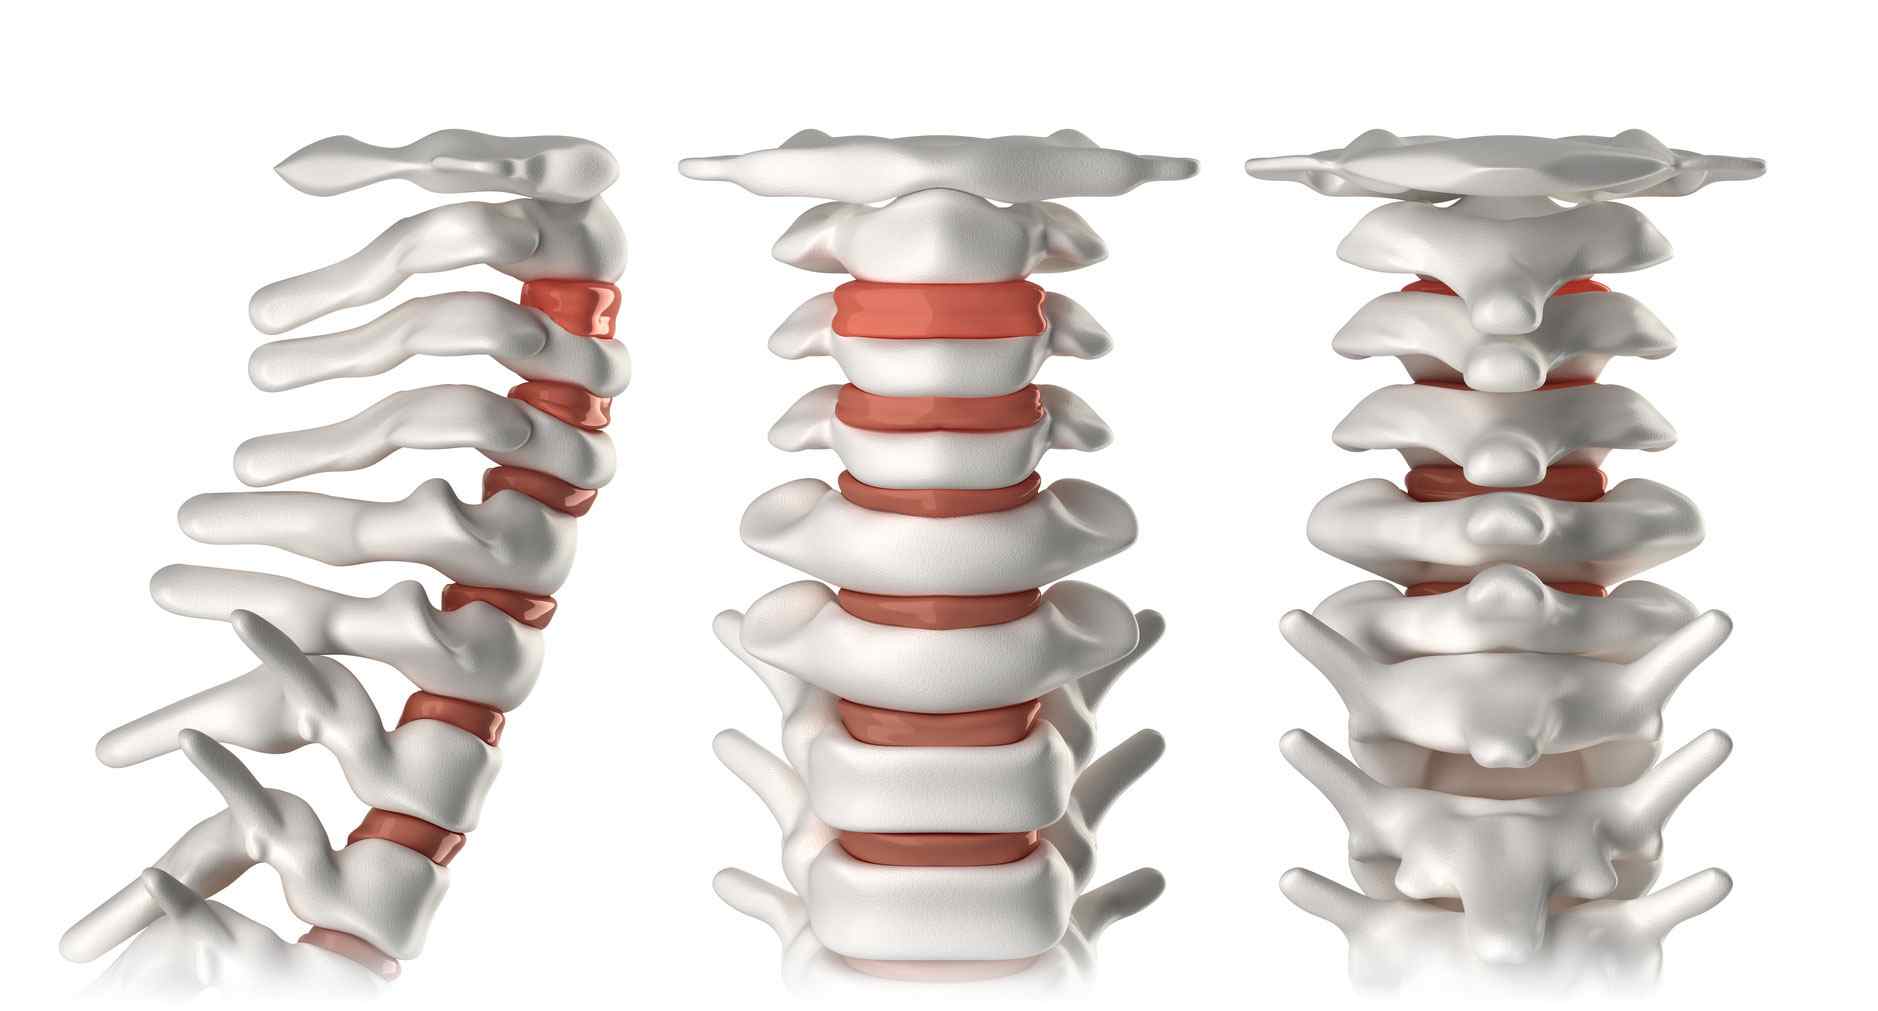 https://www.albertoalbert.com/wp-content/uploads/2015/12/tratamiento-integral-dolor-columna-vertebral-cervical-y-lumbar.jpg